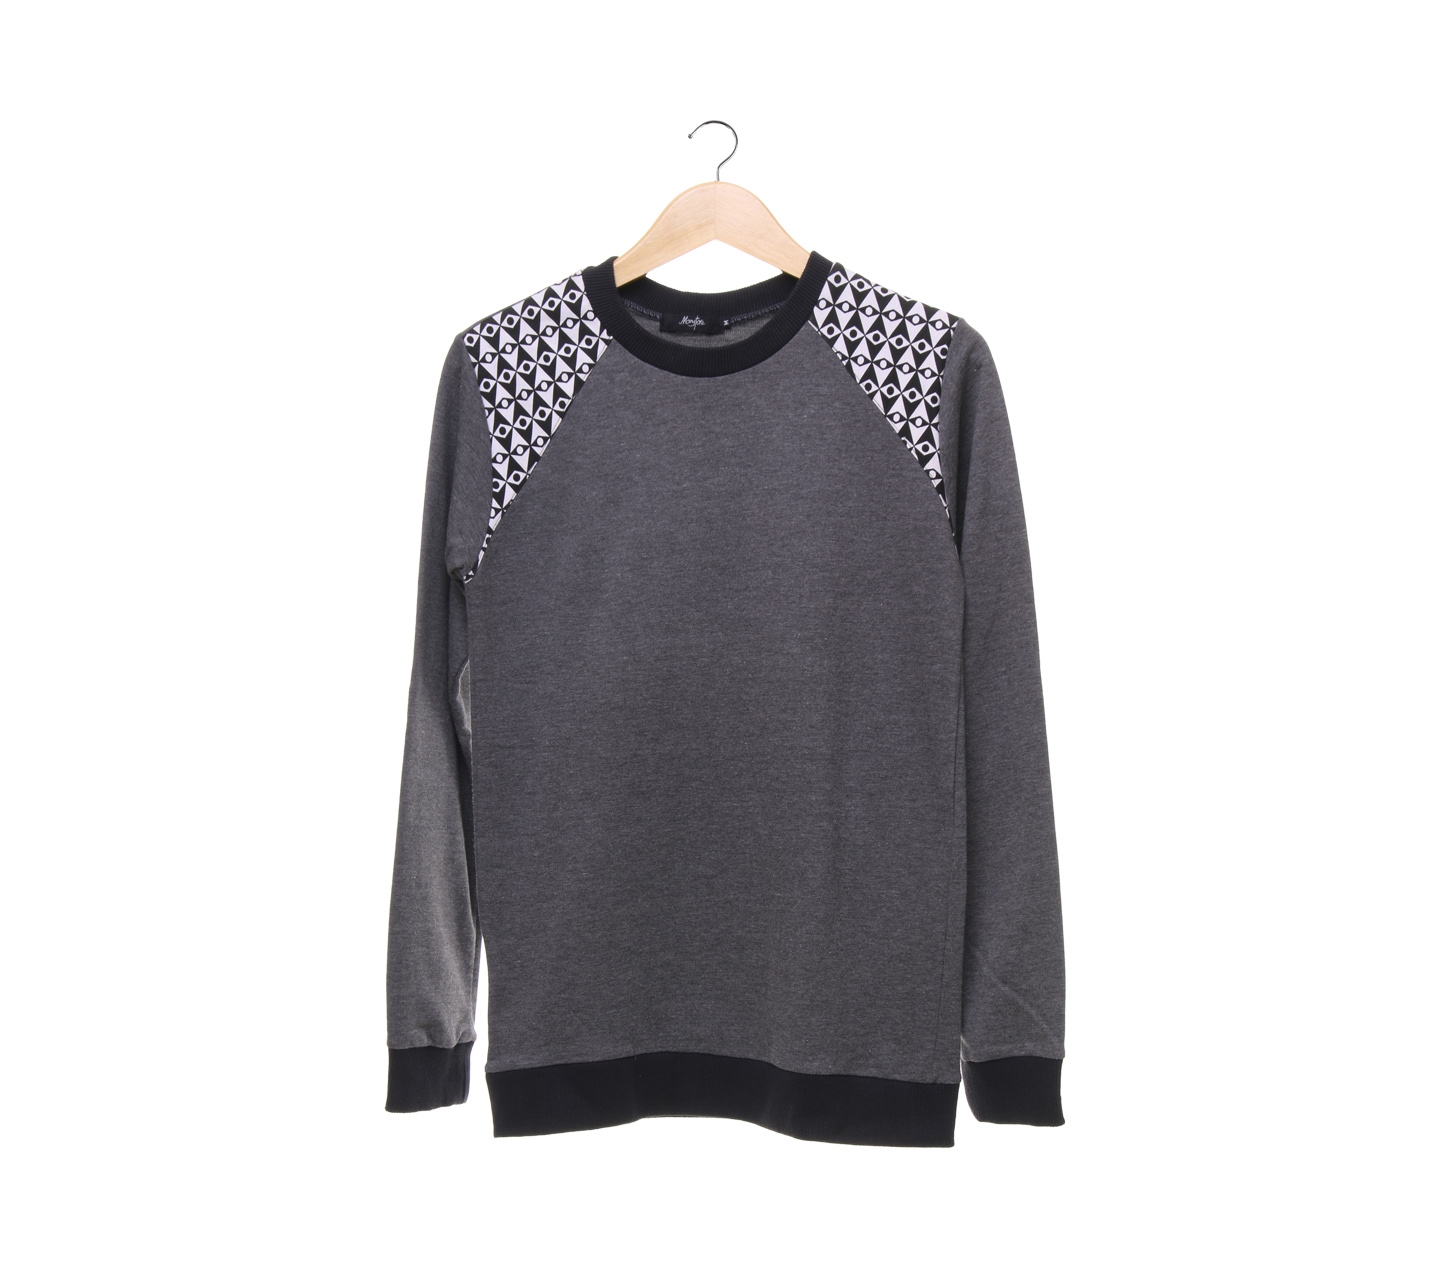 Monstore Dark Grey Sweater